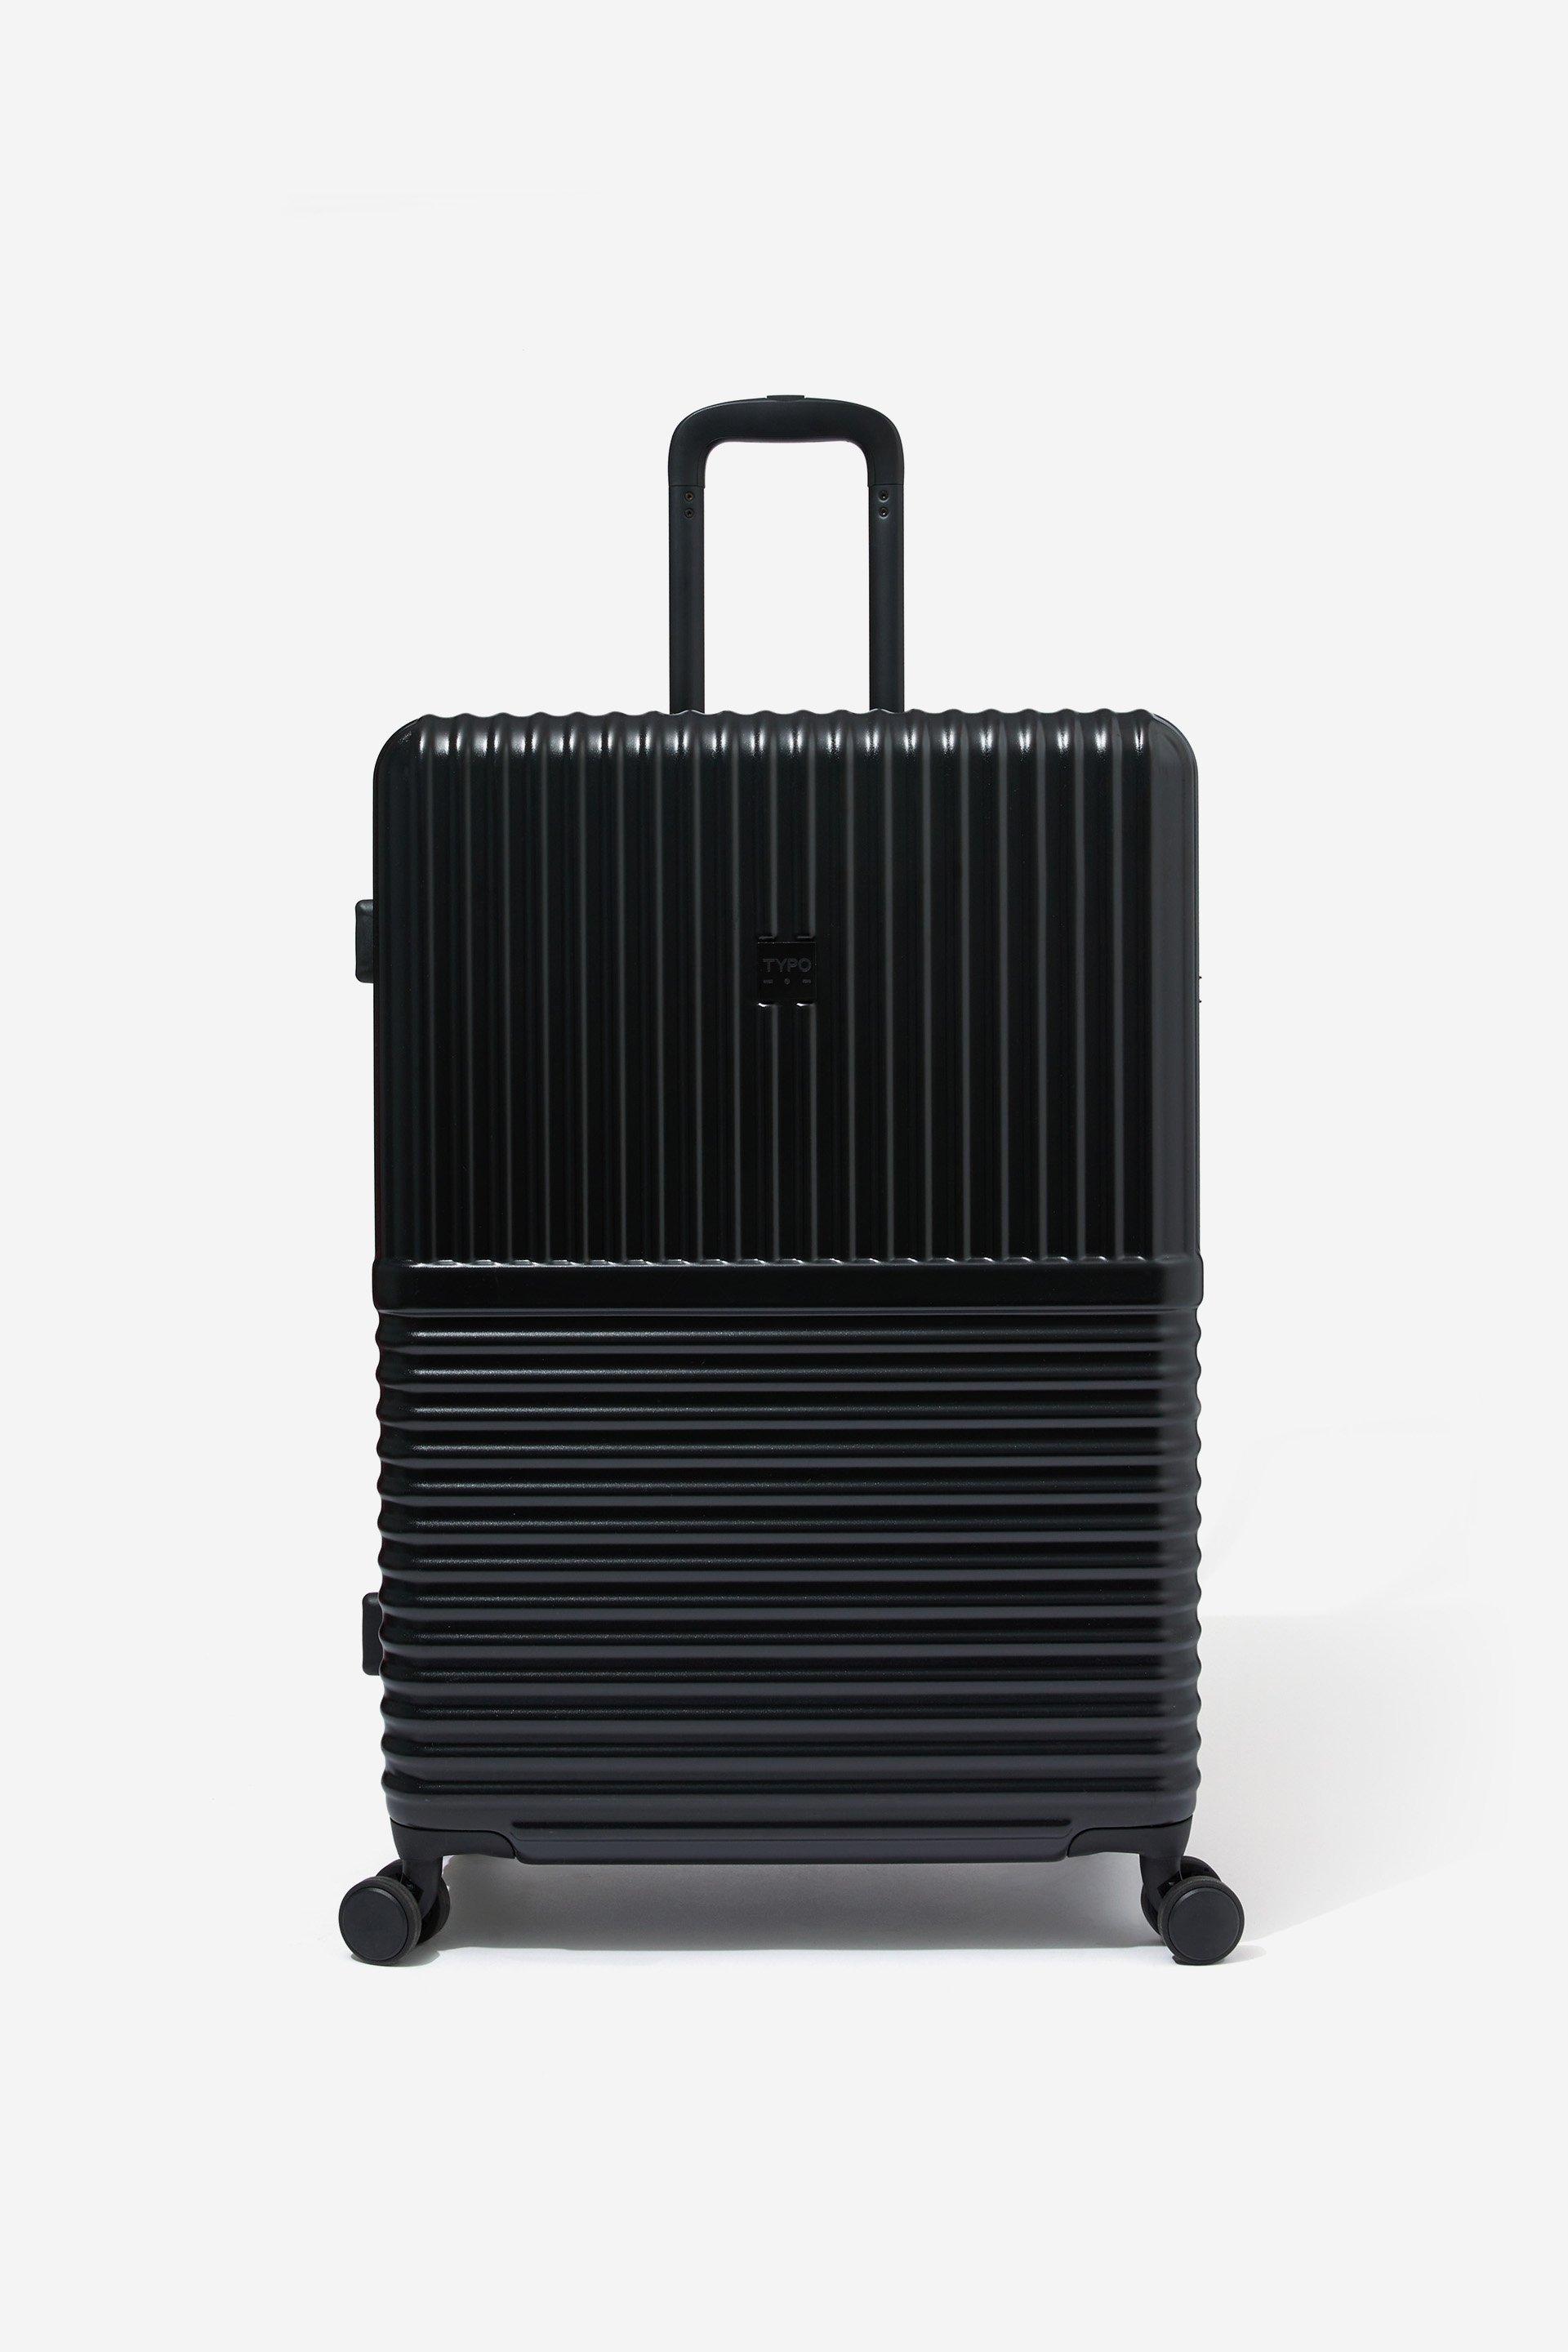 Typo - 28 Inch Large Suitcase - Black